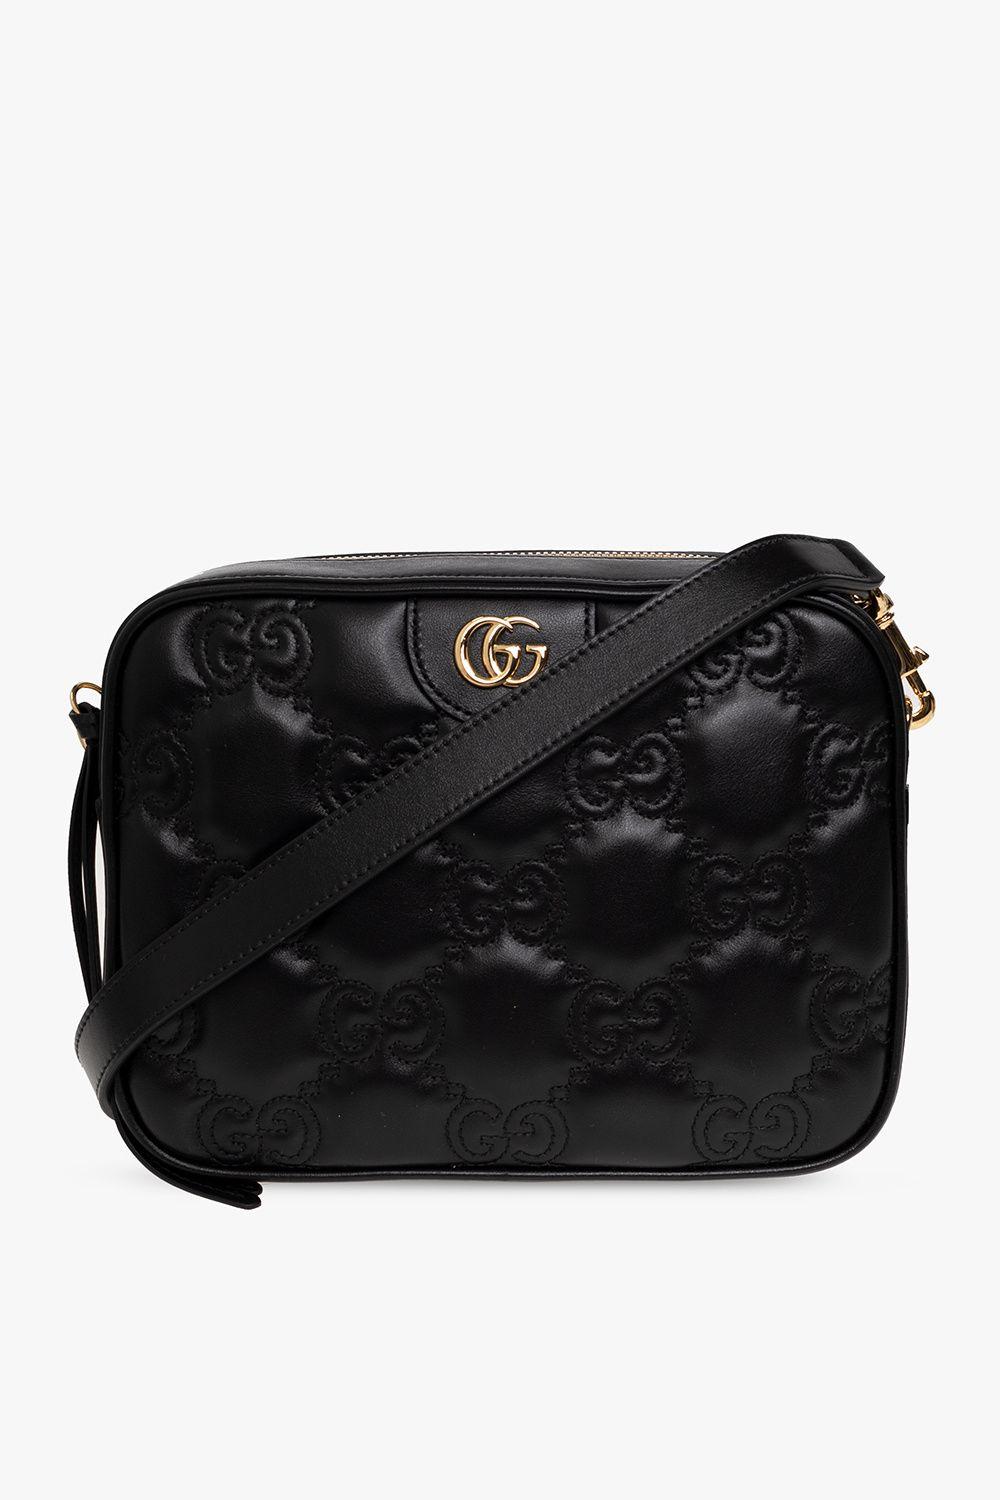 Gucci Quilted Shoulder Bag in Black | Lyst